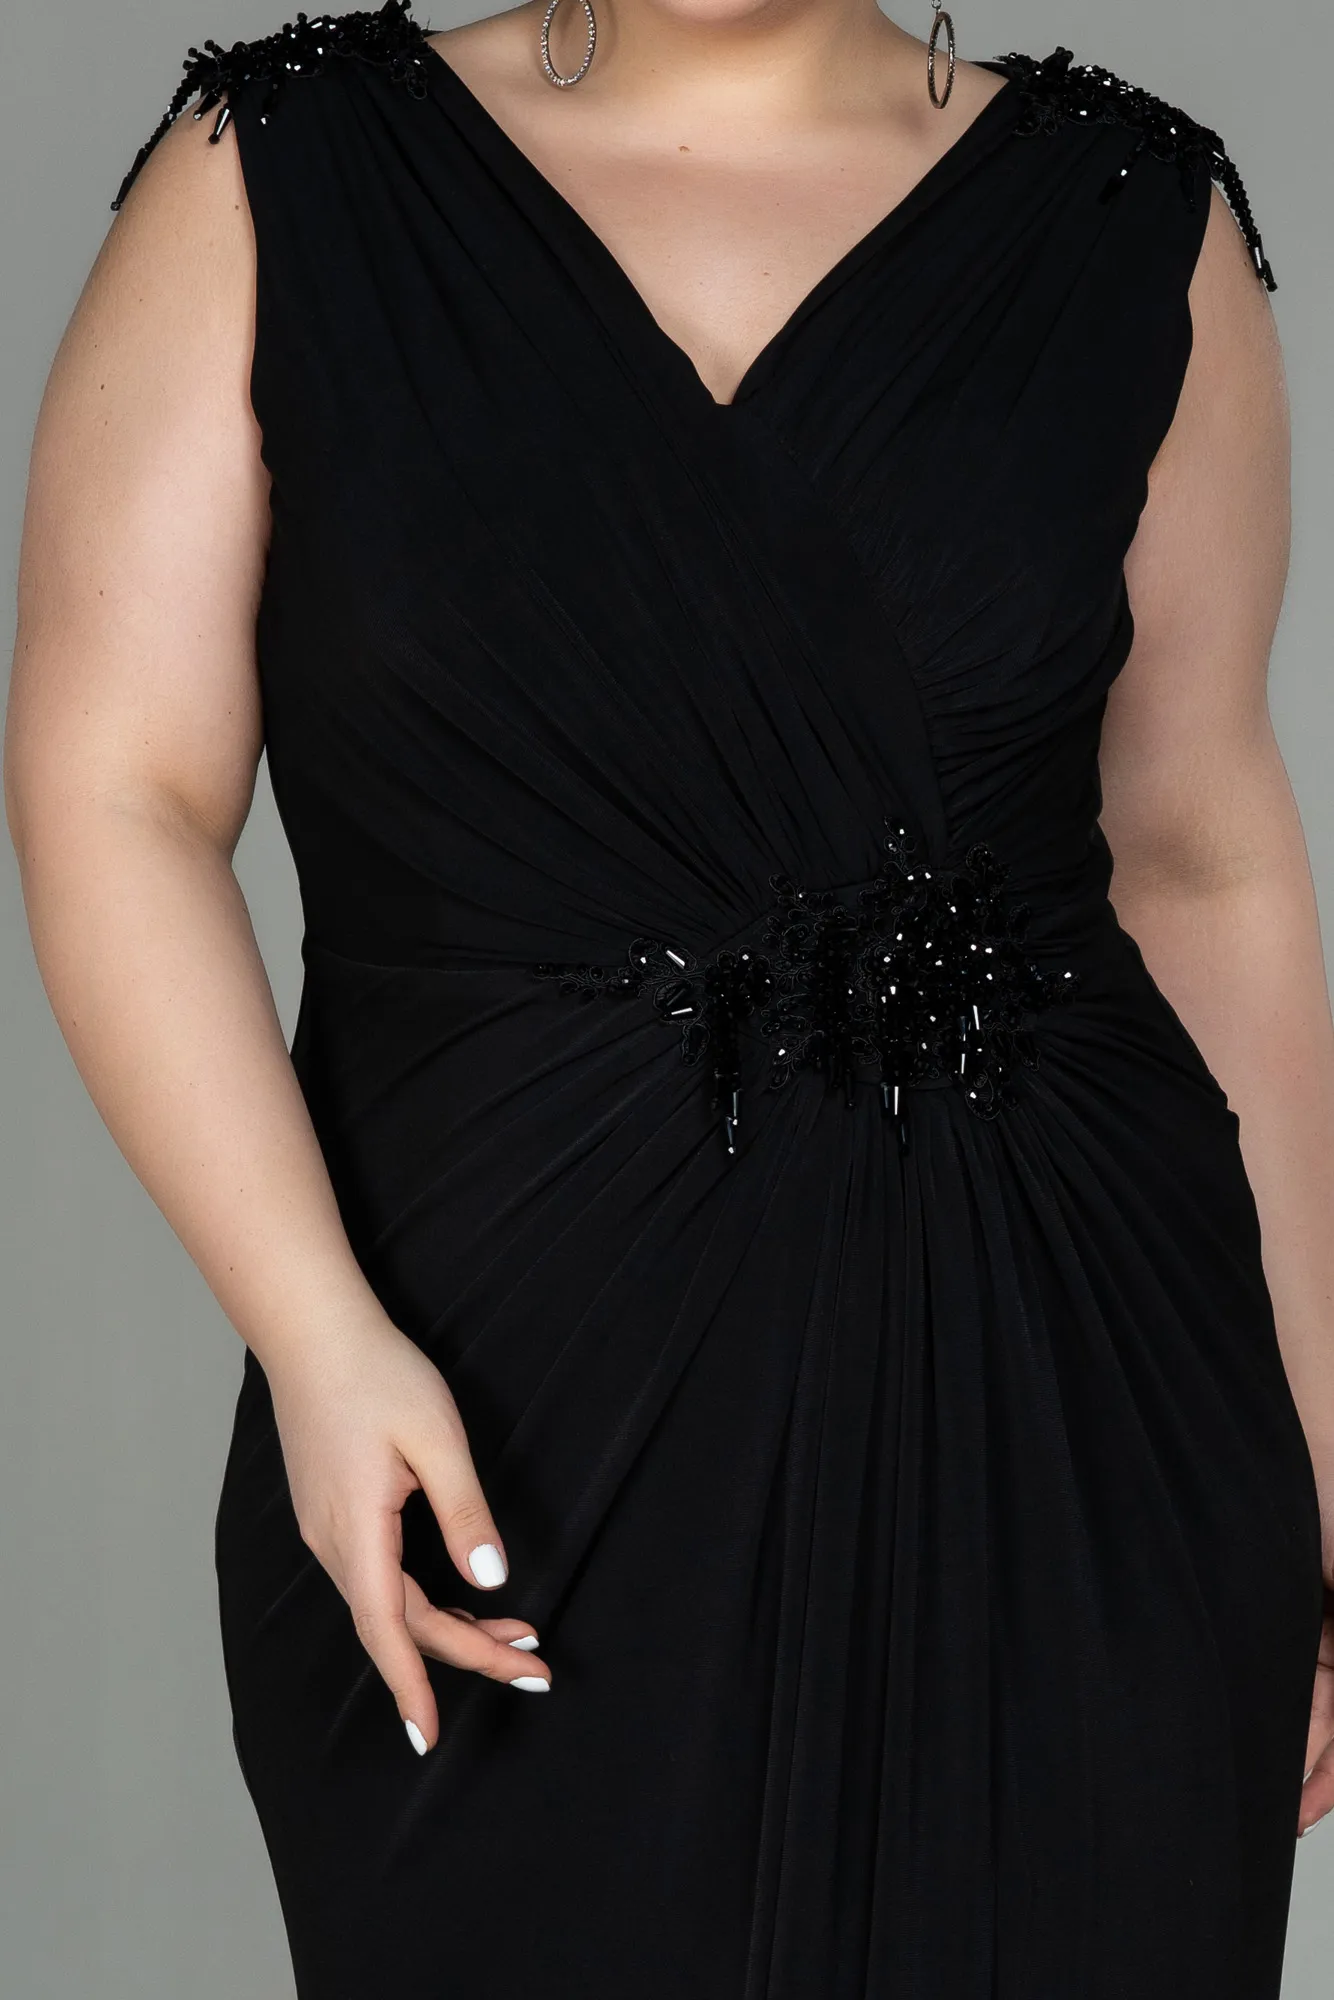 Black-Long Plus Size Evening Dress ABU2854